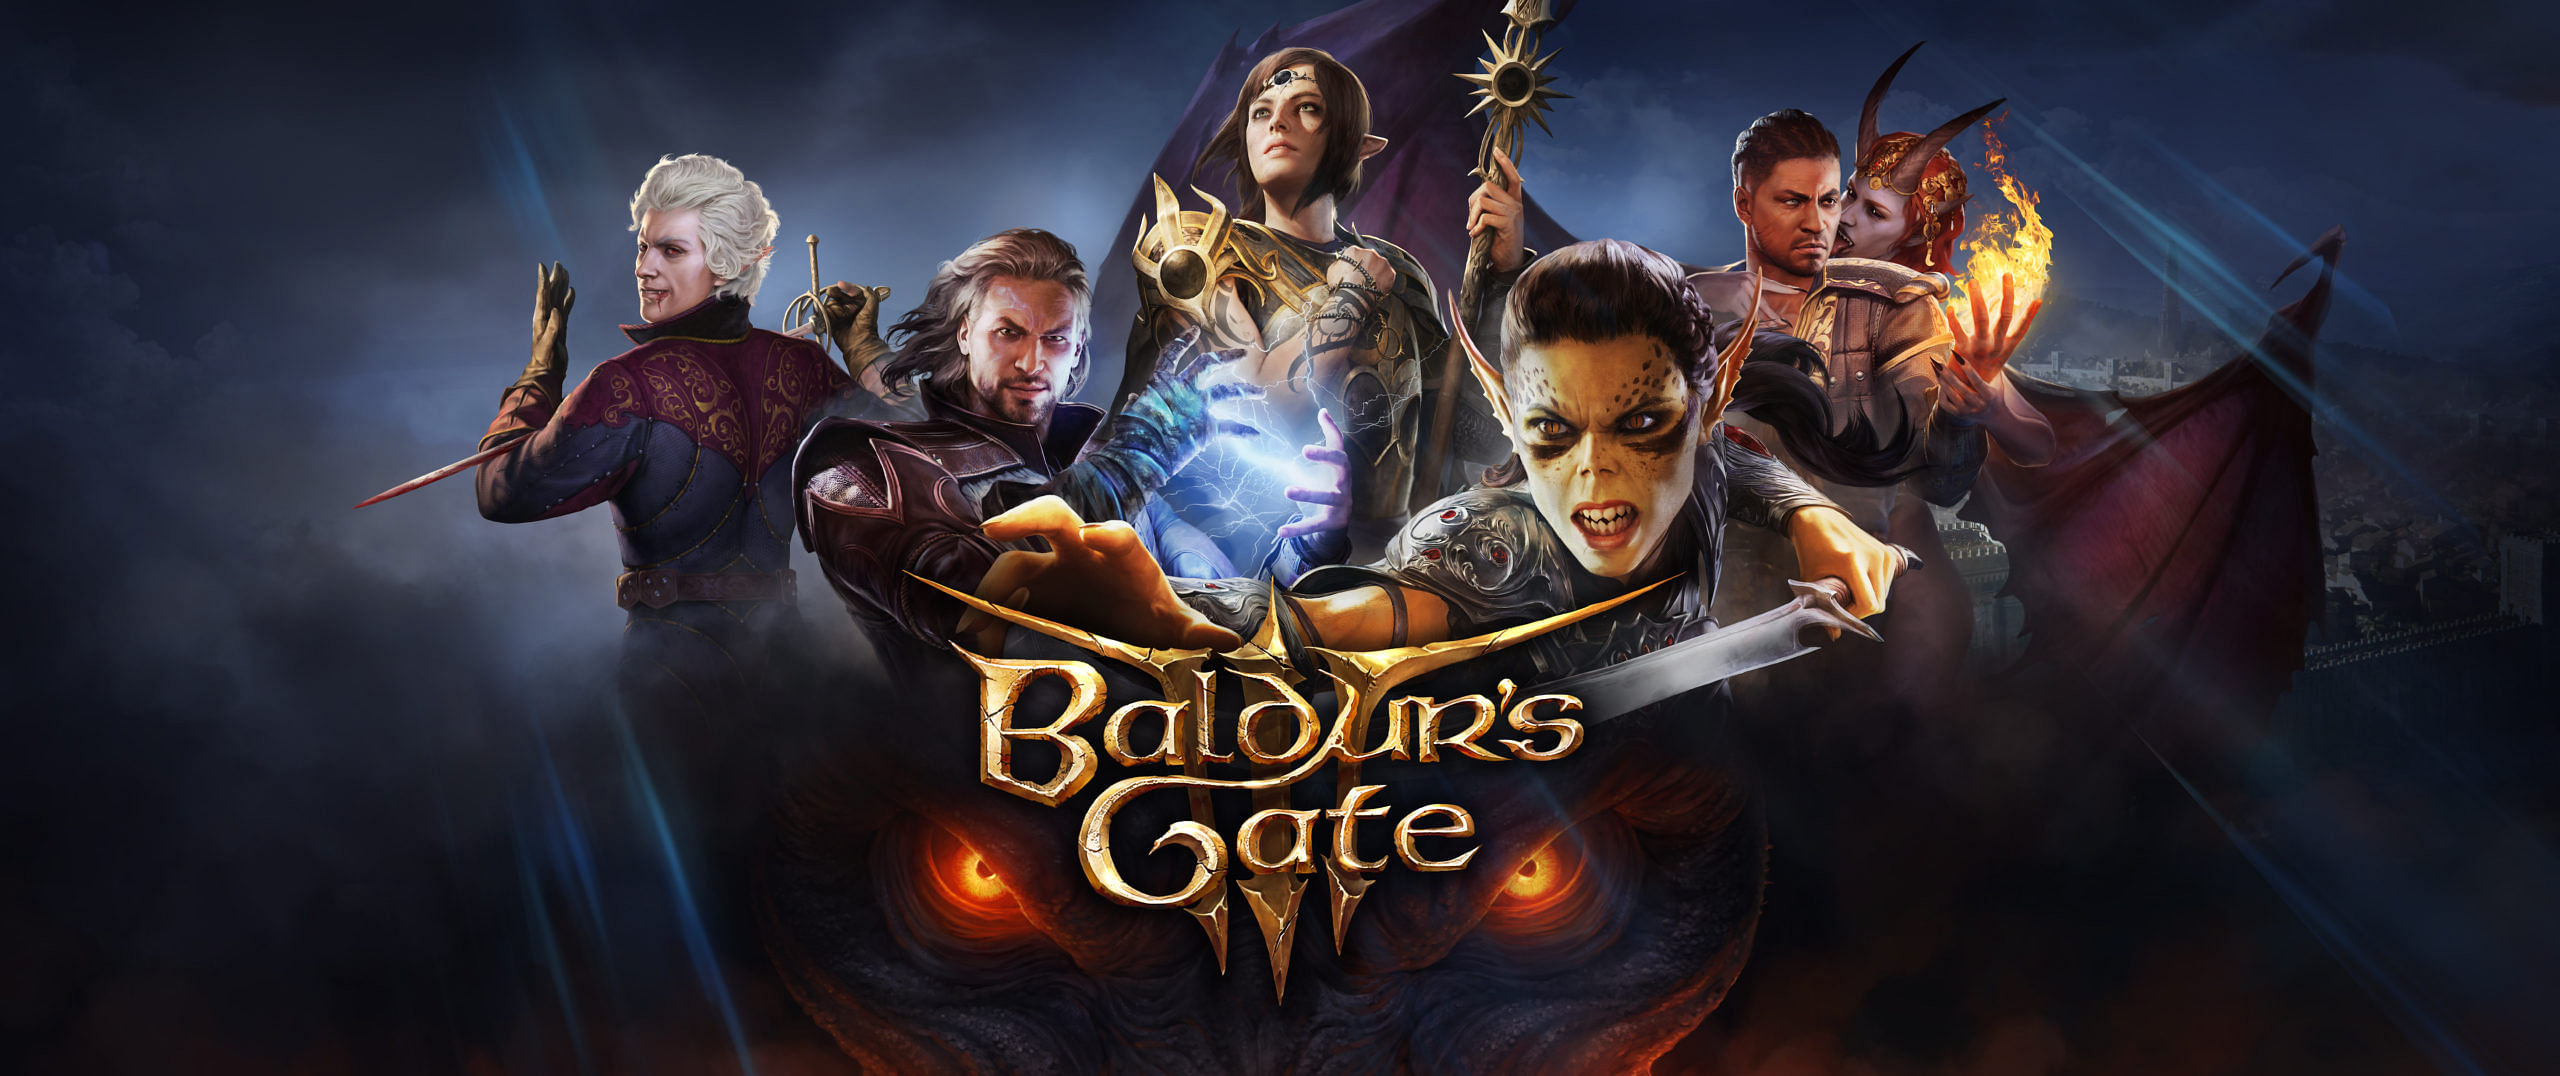 Baldur's Gate 3 Developers Are Working On Crossplay Support - Gameranx